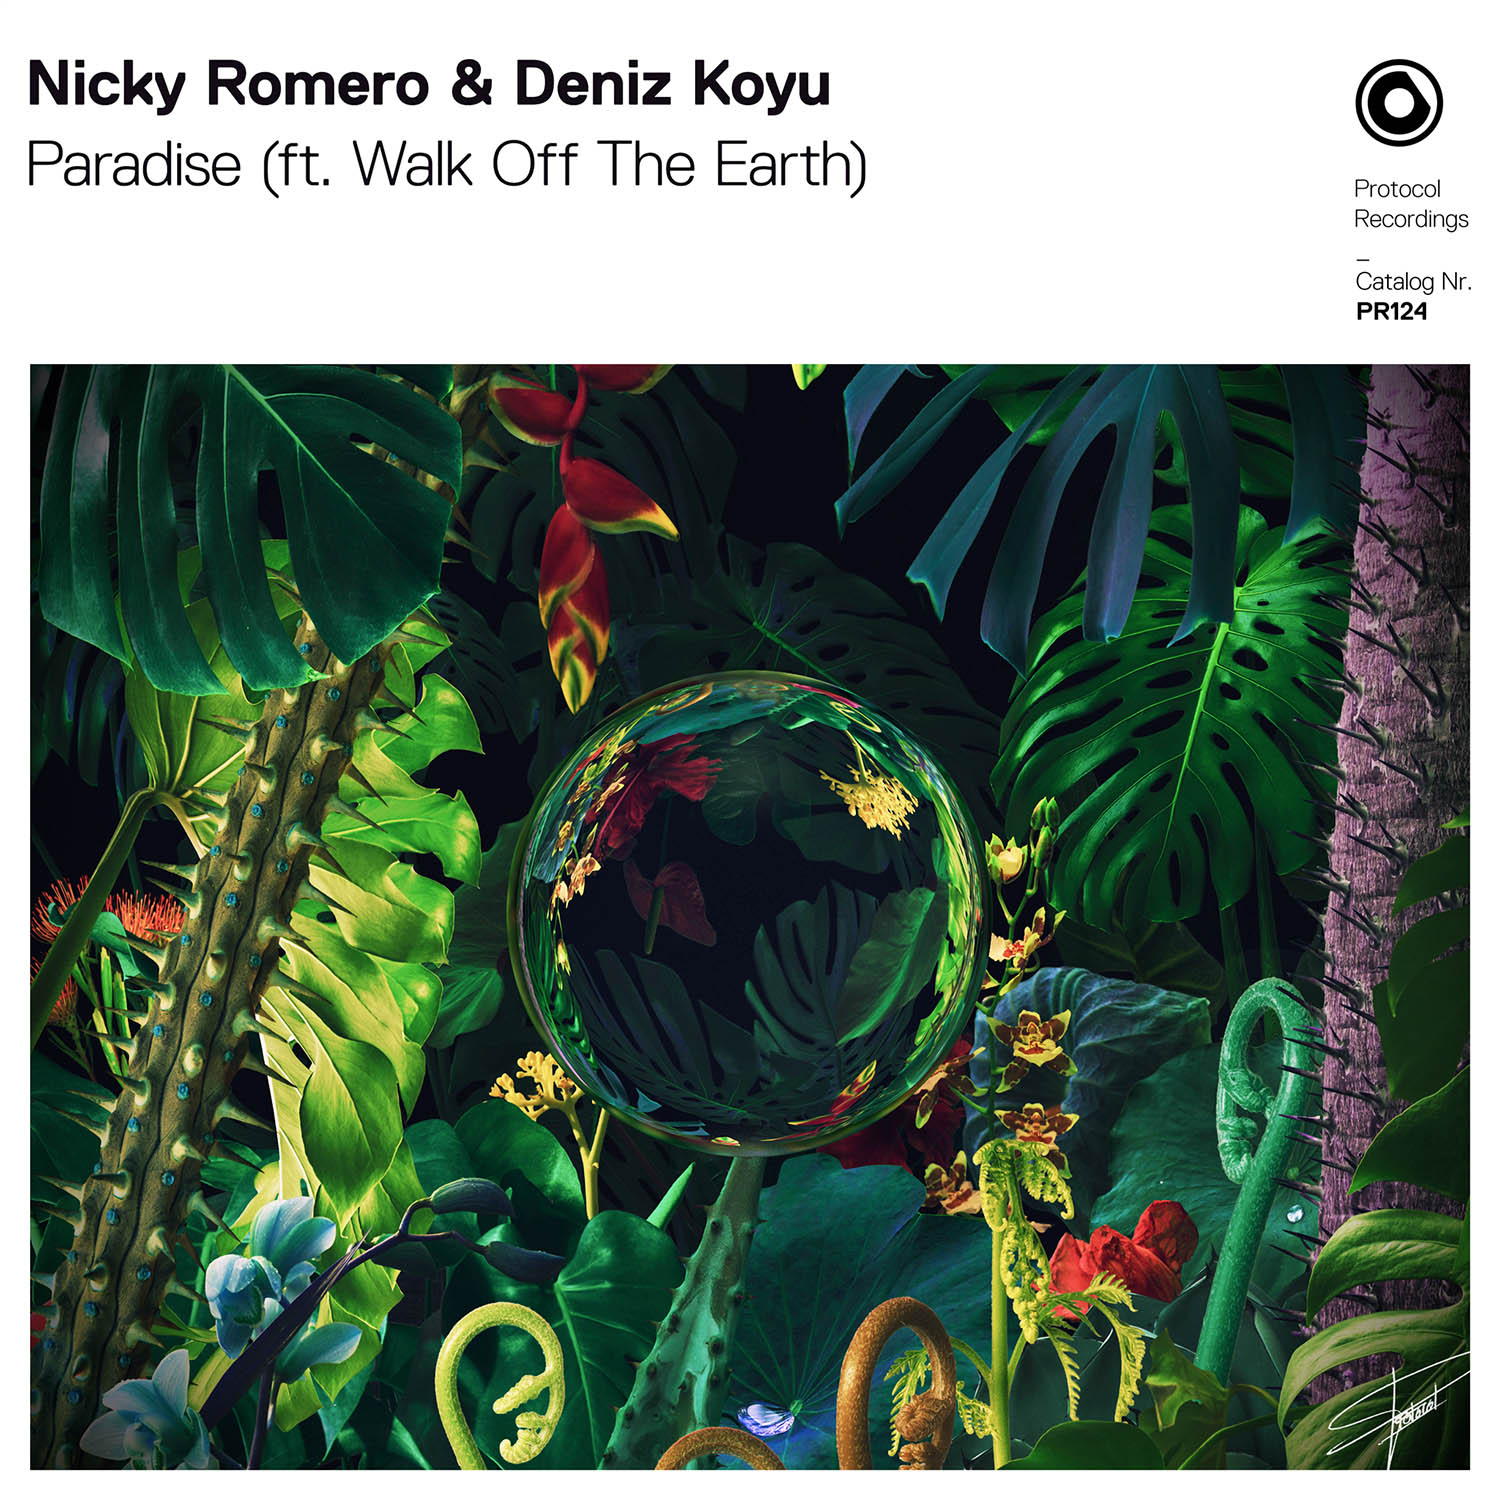 Nicky Romero & Deniz Koyu - Paradise (ft. Walk off the Earth)